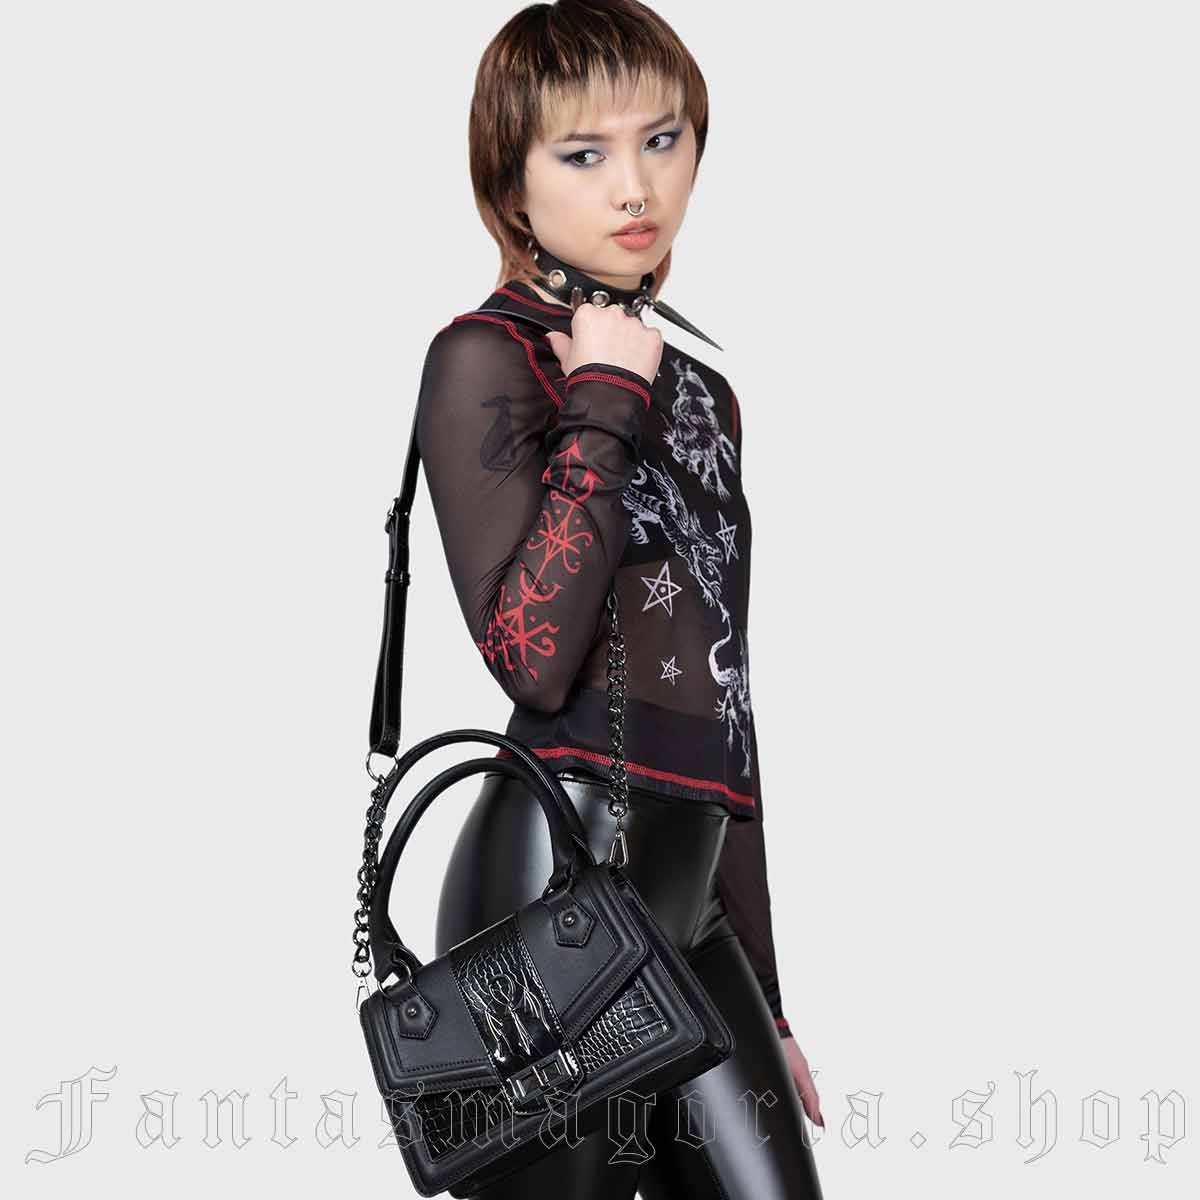 ALDO Women's Regular Jerilini Top Handle Bag, Black: Handbags